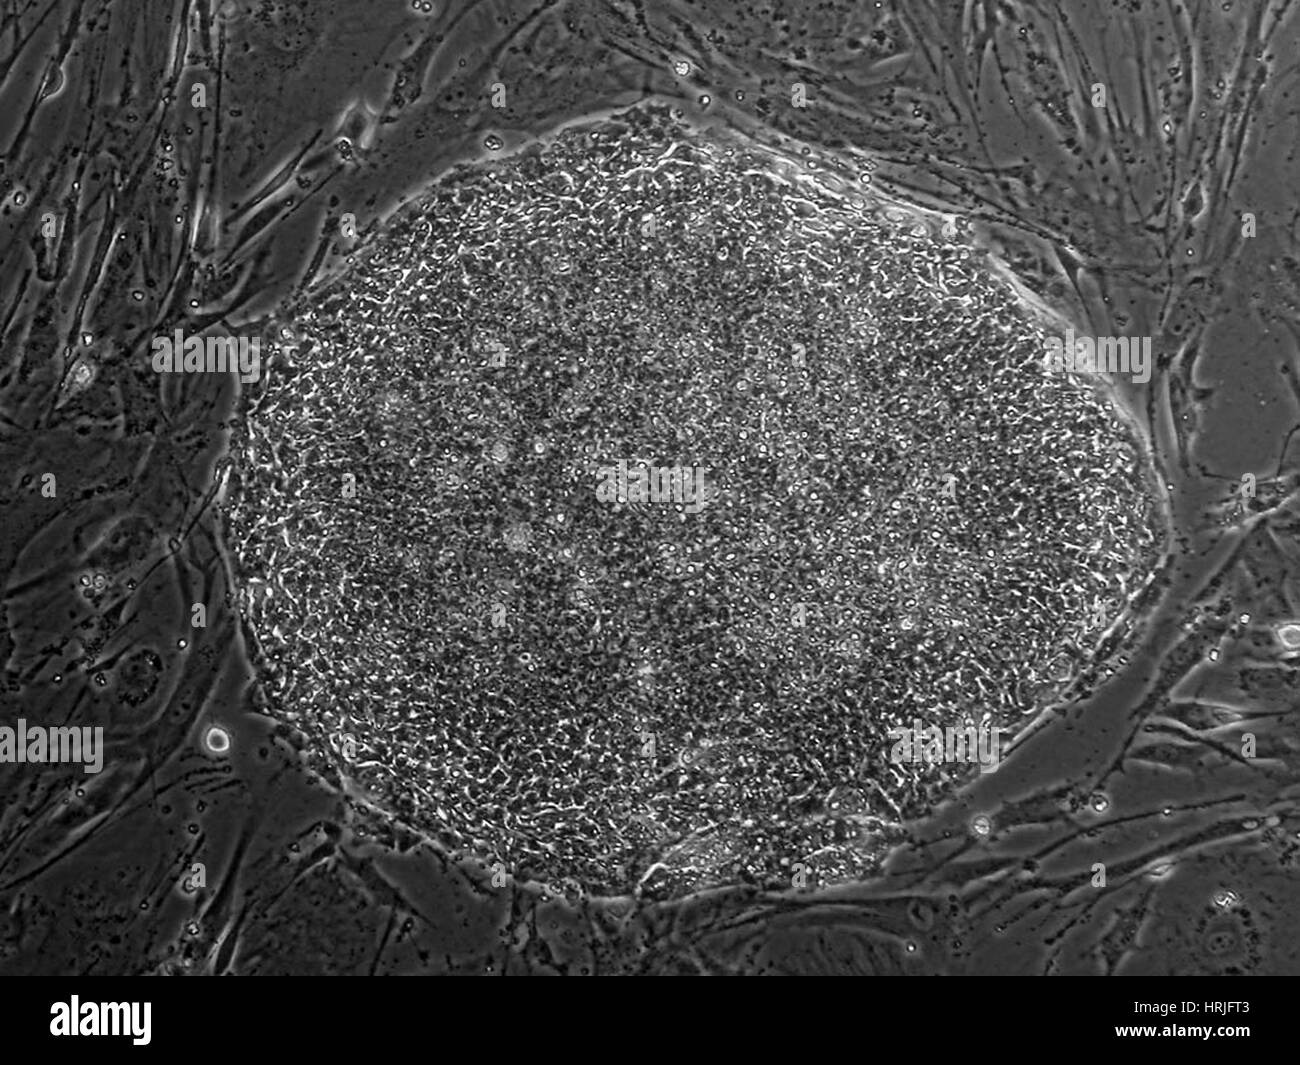 Human Embryonic Stem Cell Line WA13 Stock Photo